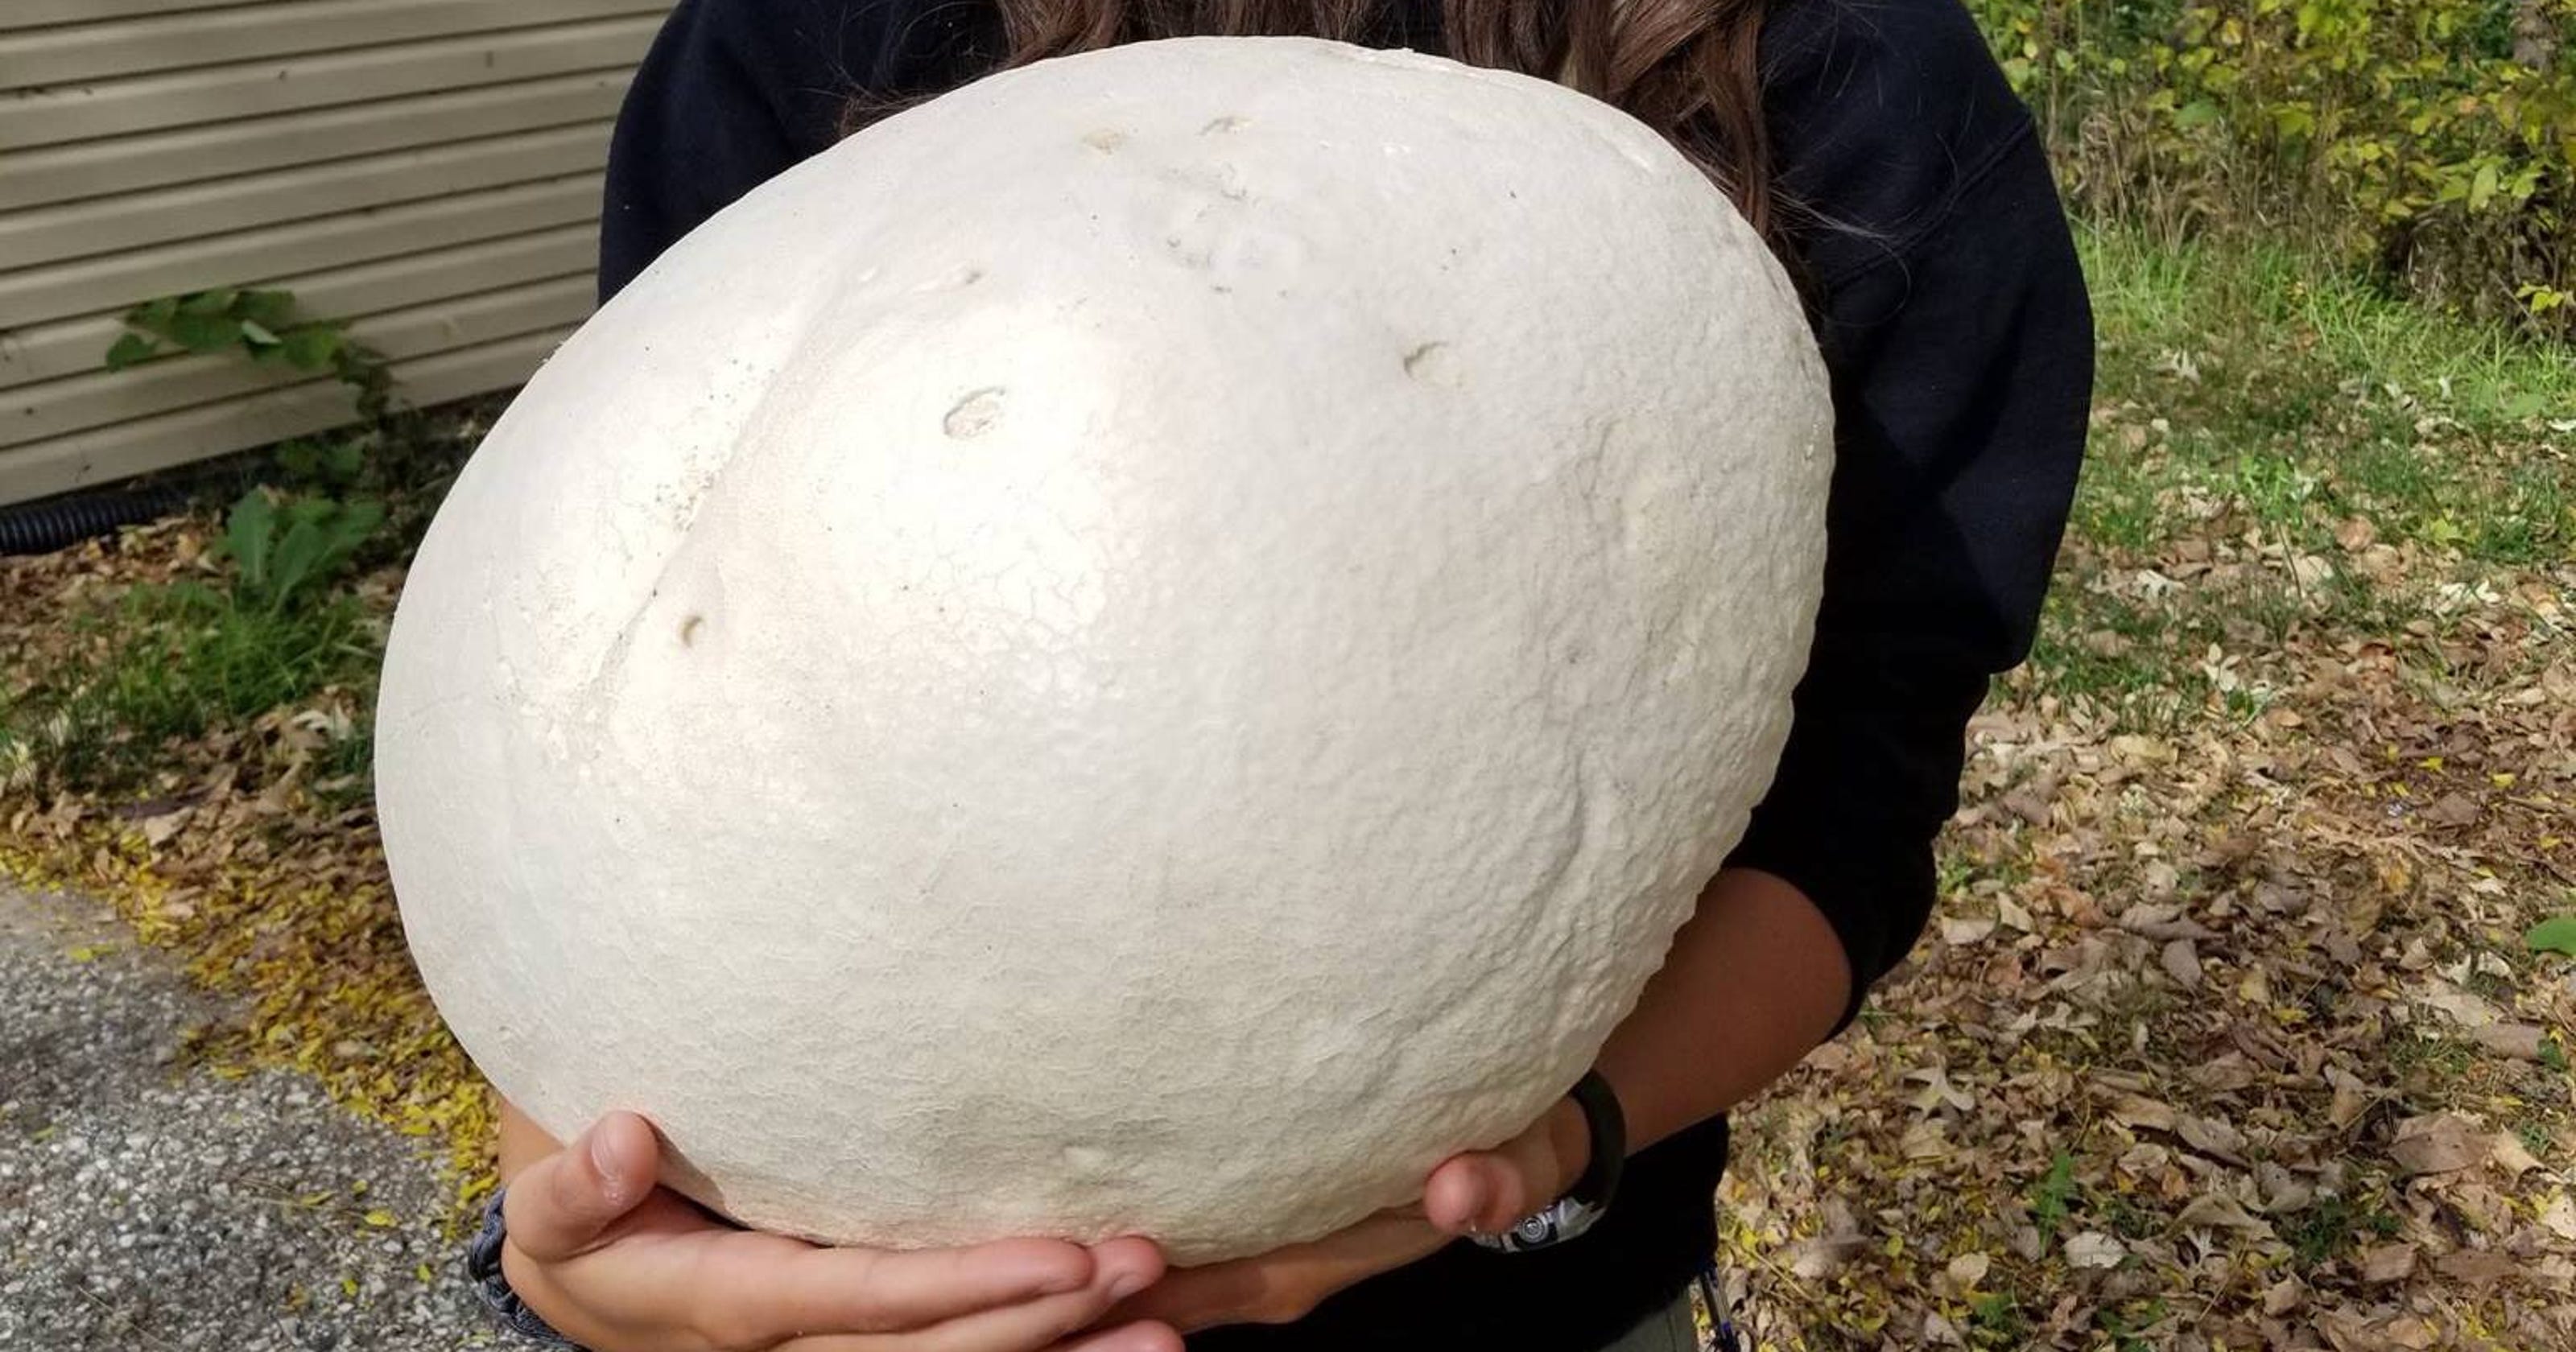 Check Out This Beach Ball Sized Puffball Mushroom Found In Iowa